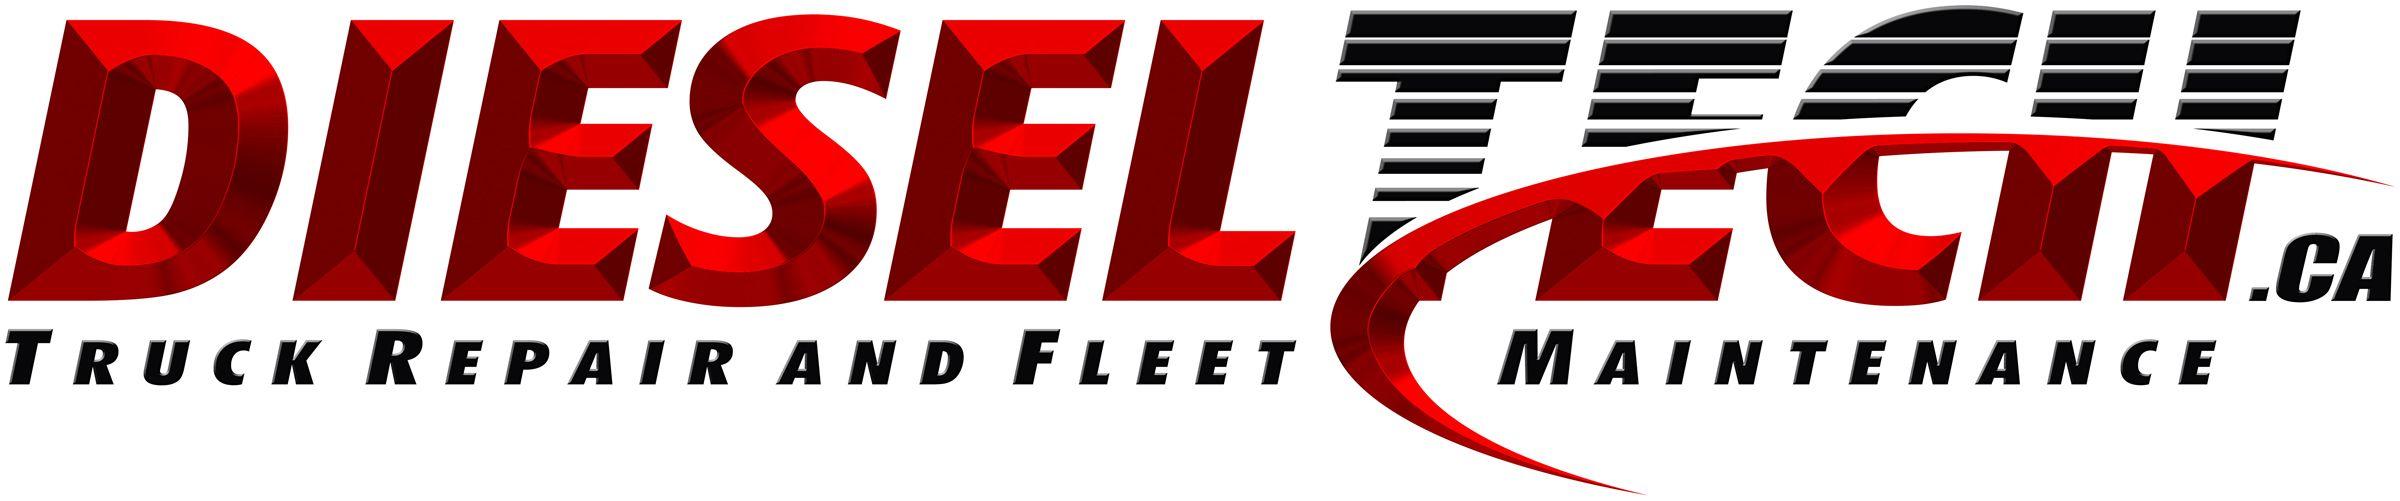 Diesel Mechanic Logo - Pictures of Diesel Mechanic Logo - kidskunst.info